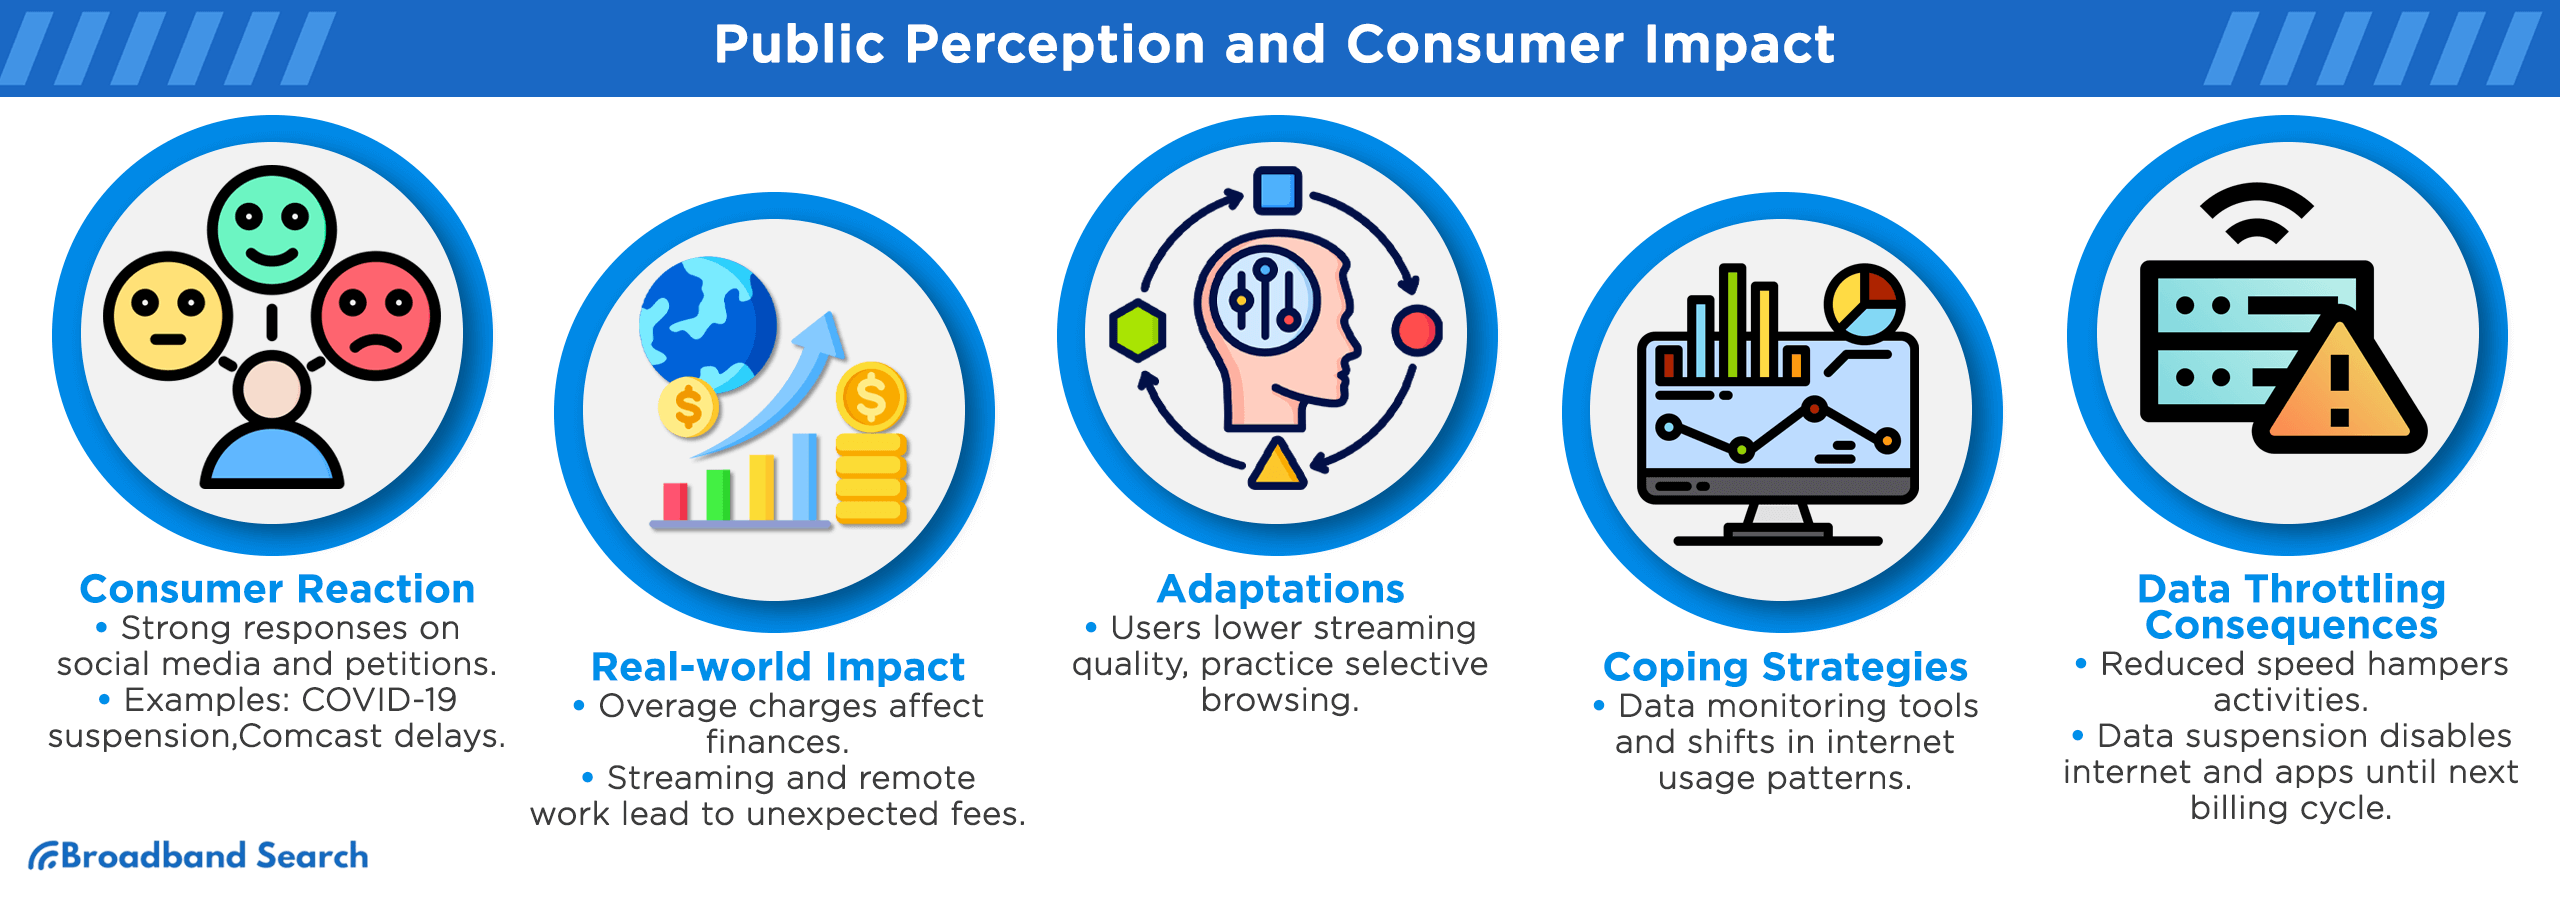 Public perception and consumer impact